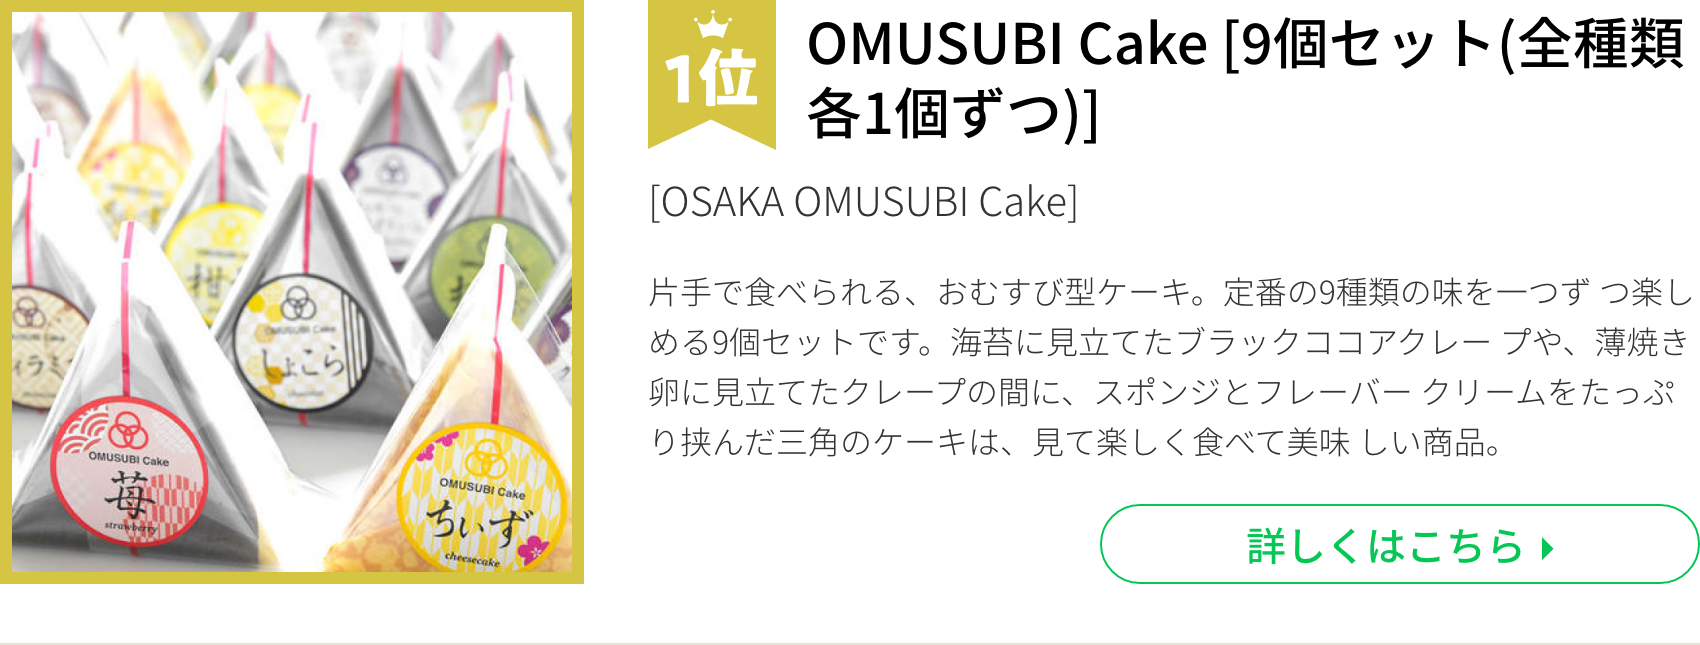 OMUSUBI Cake ［9個セット（全種類各1個ずつ）］